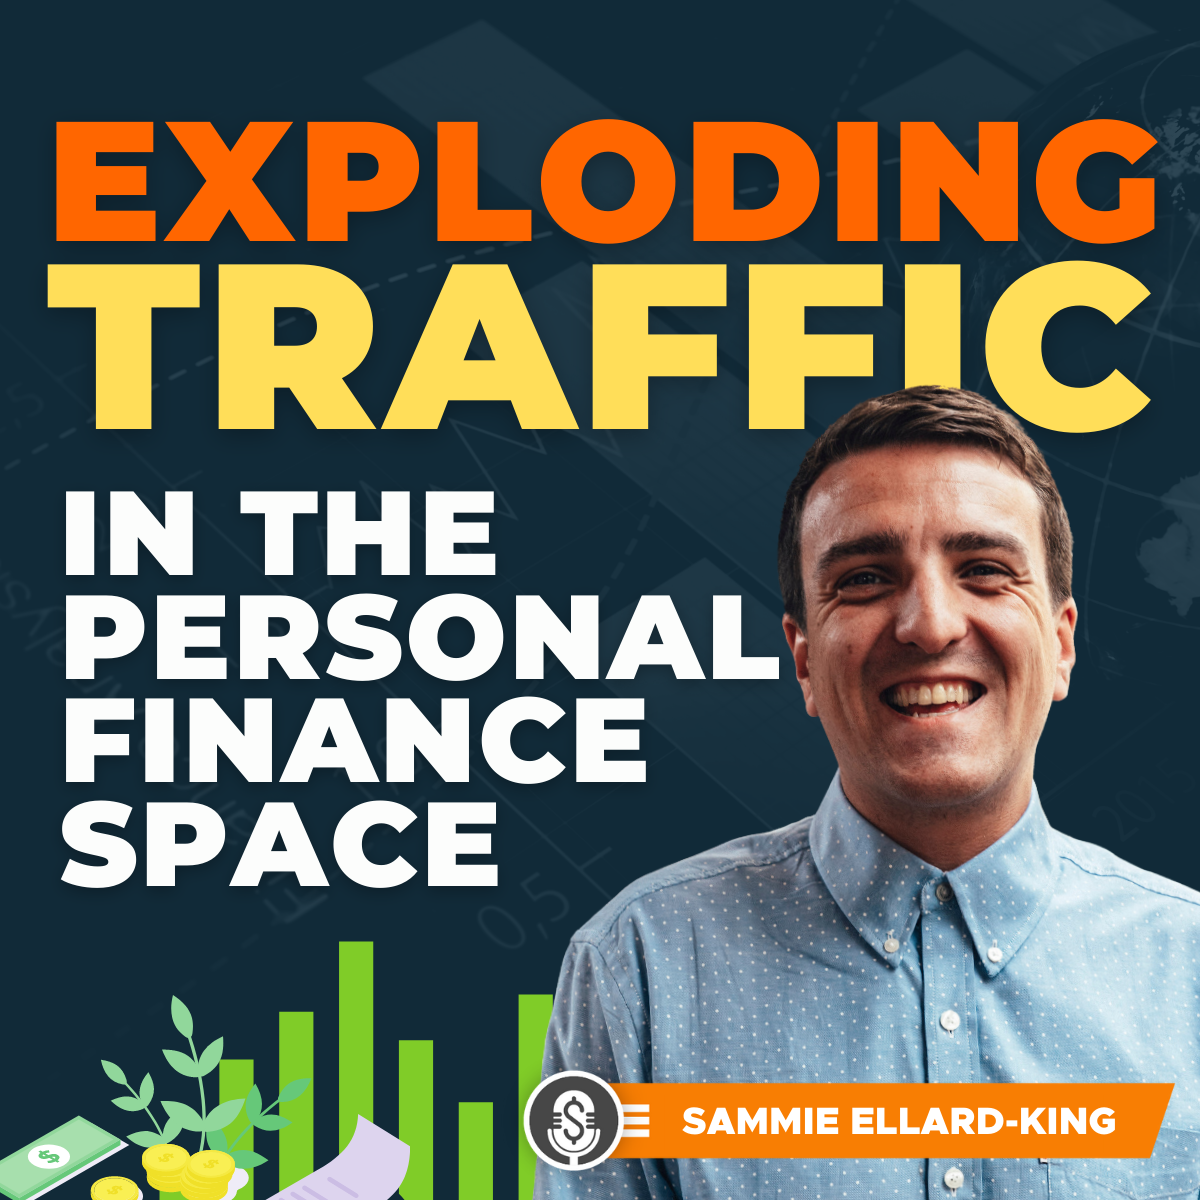 Sammie Ellard-King on Exploding Traffic in the Personal Finance Space